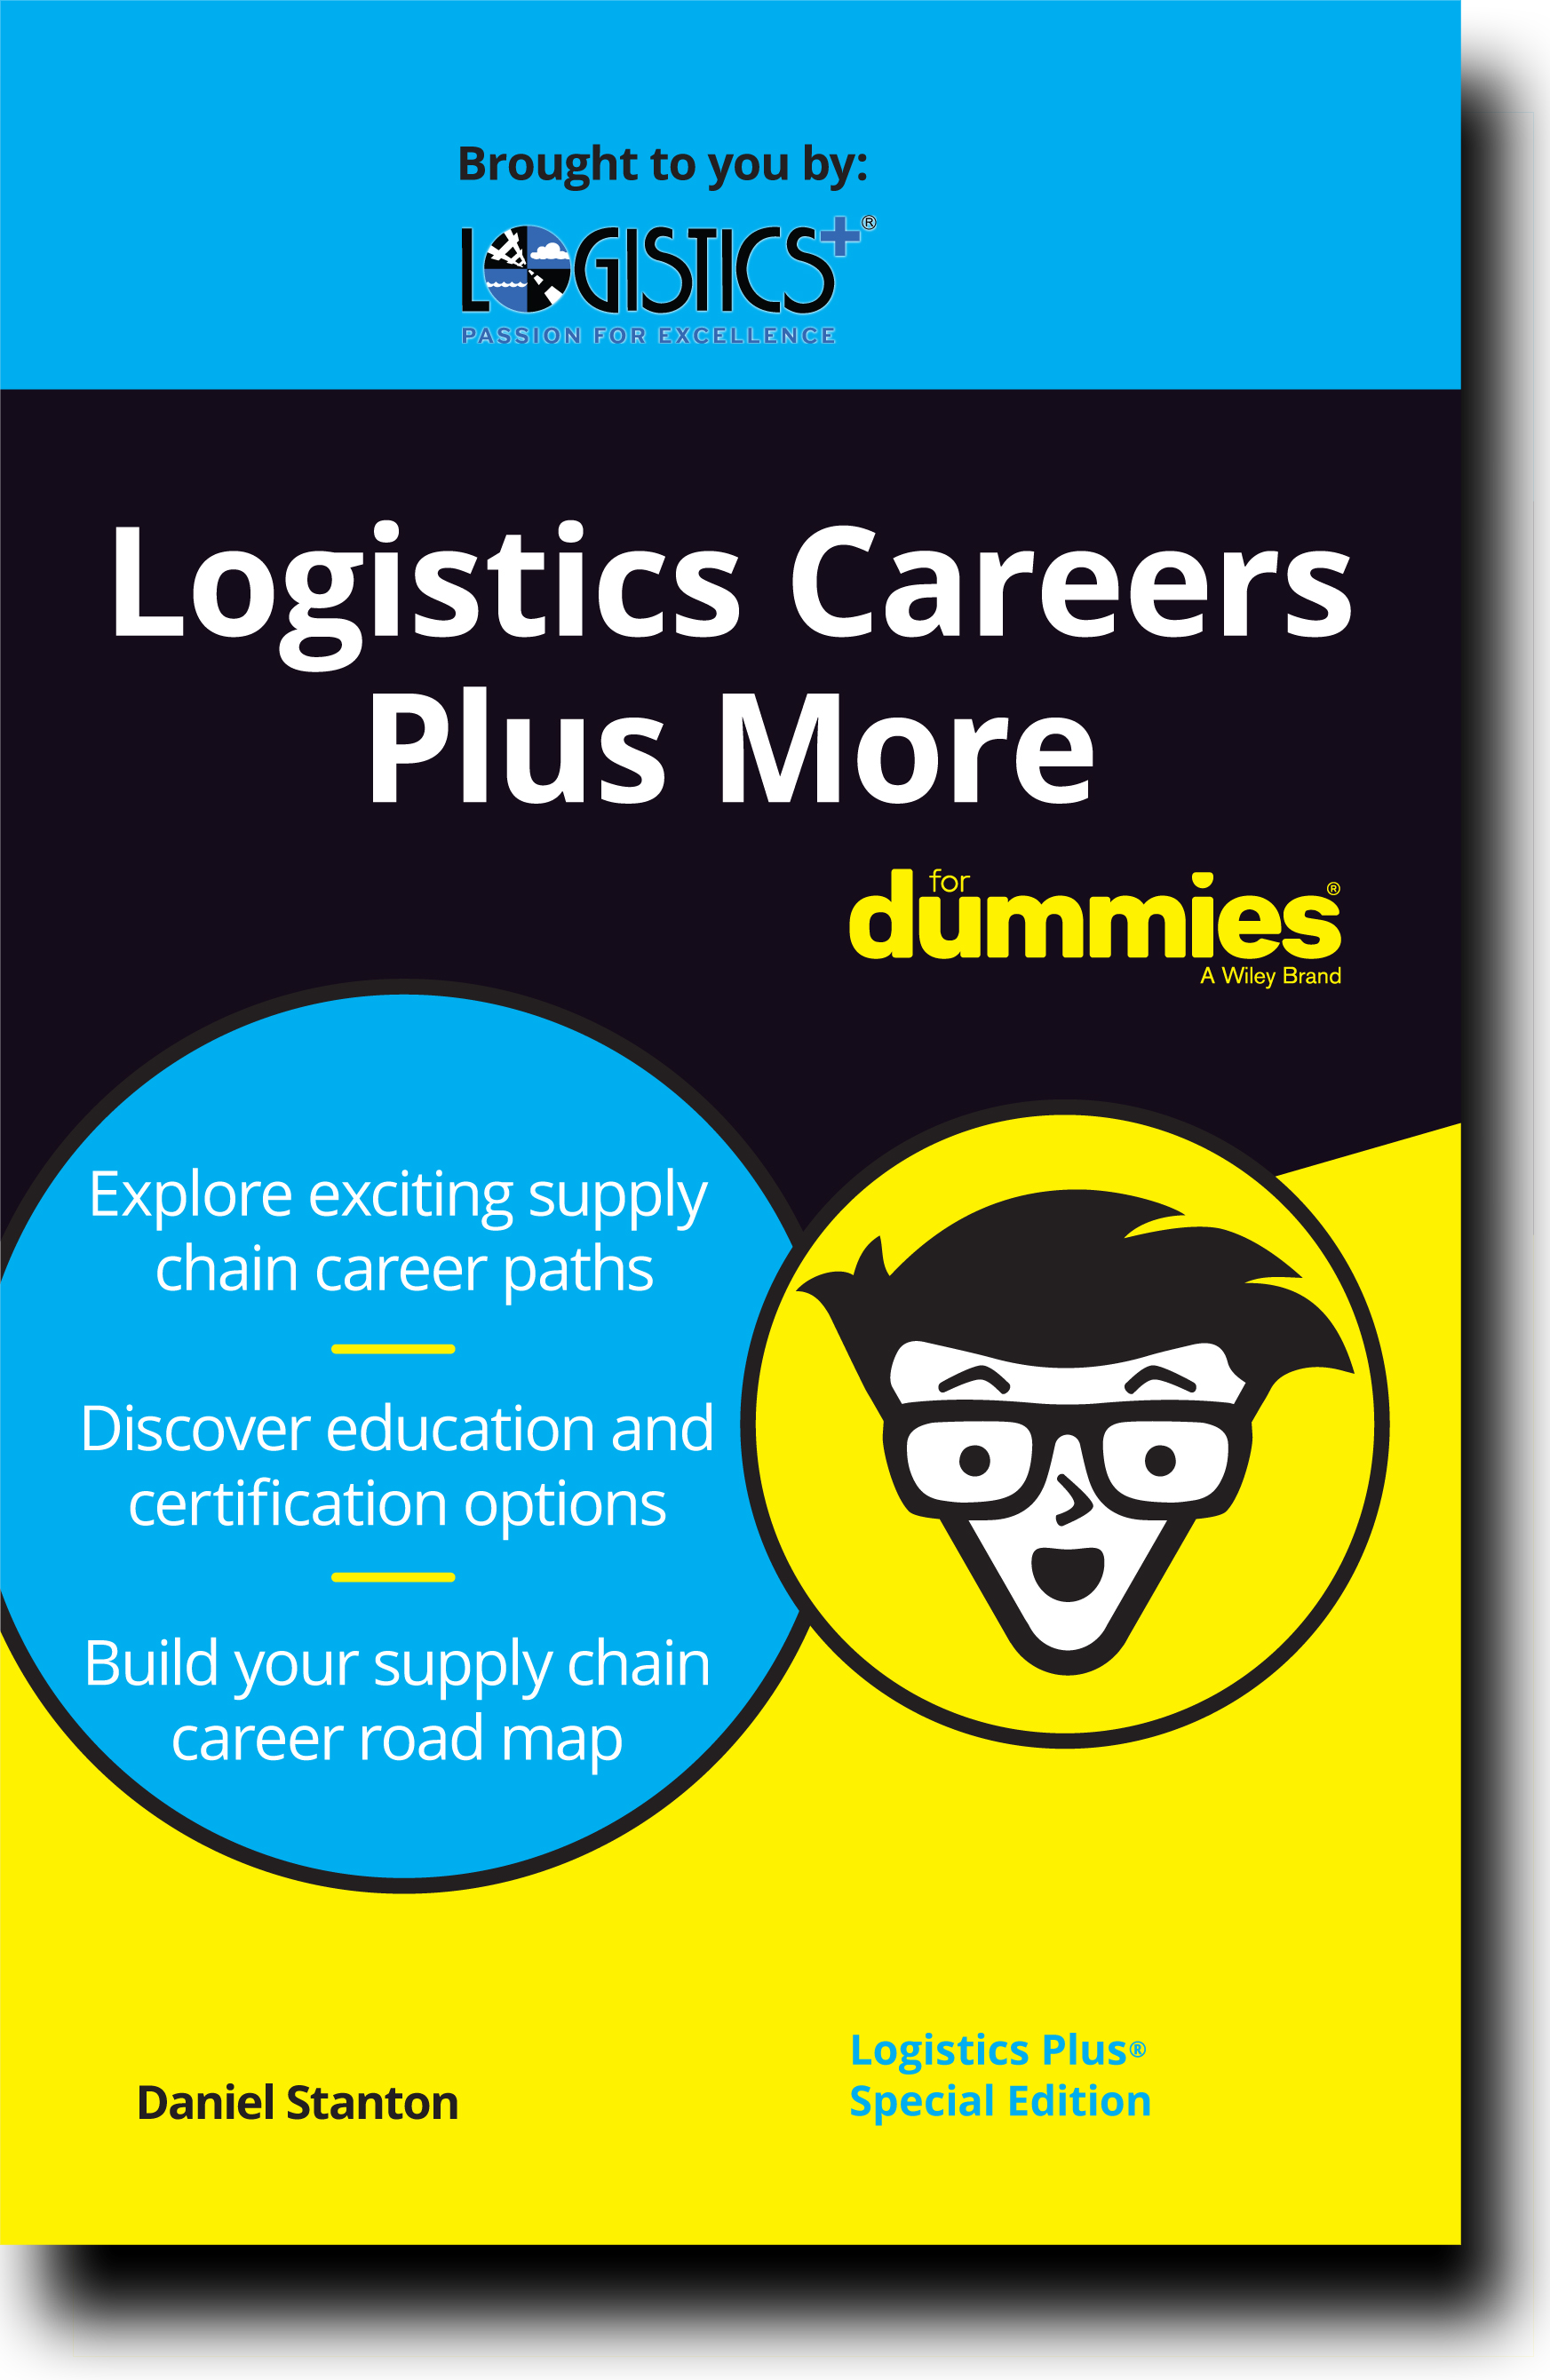 Logistics Careers Plus More for Dummies Cover